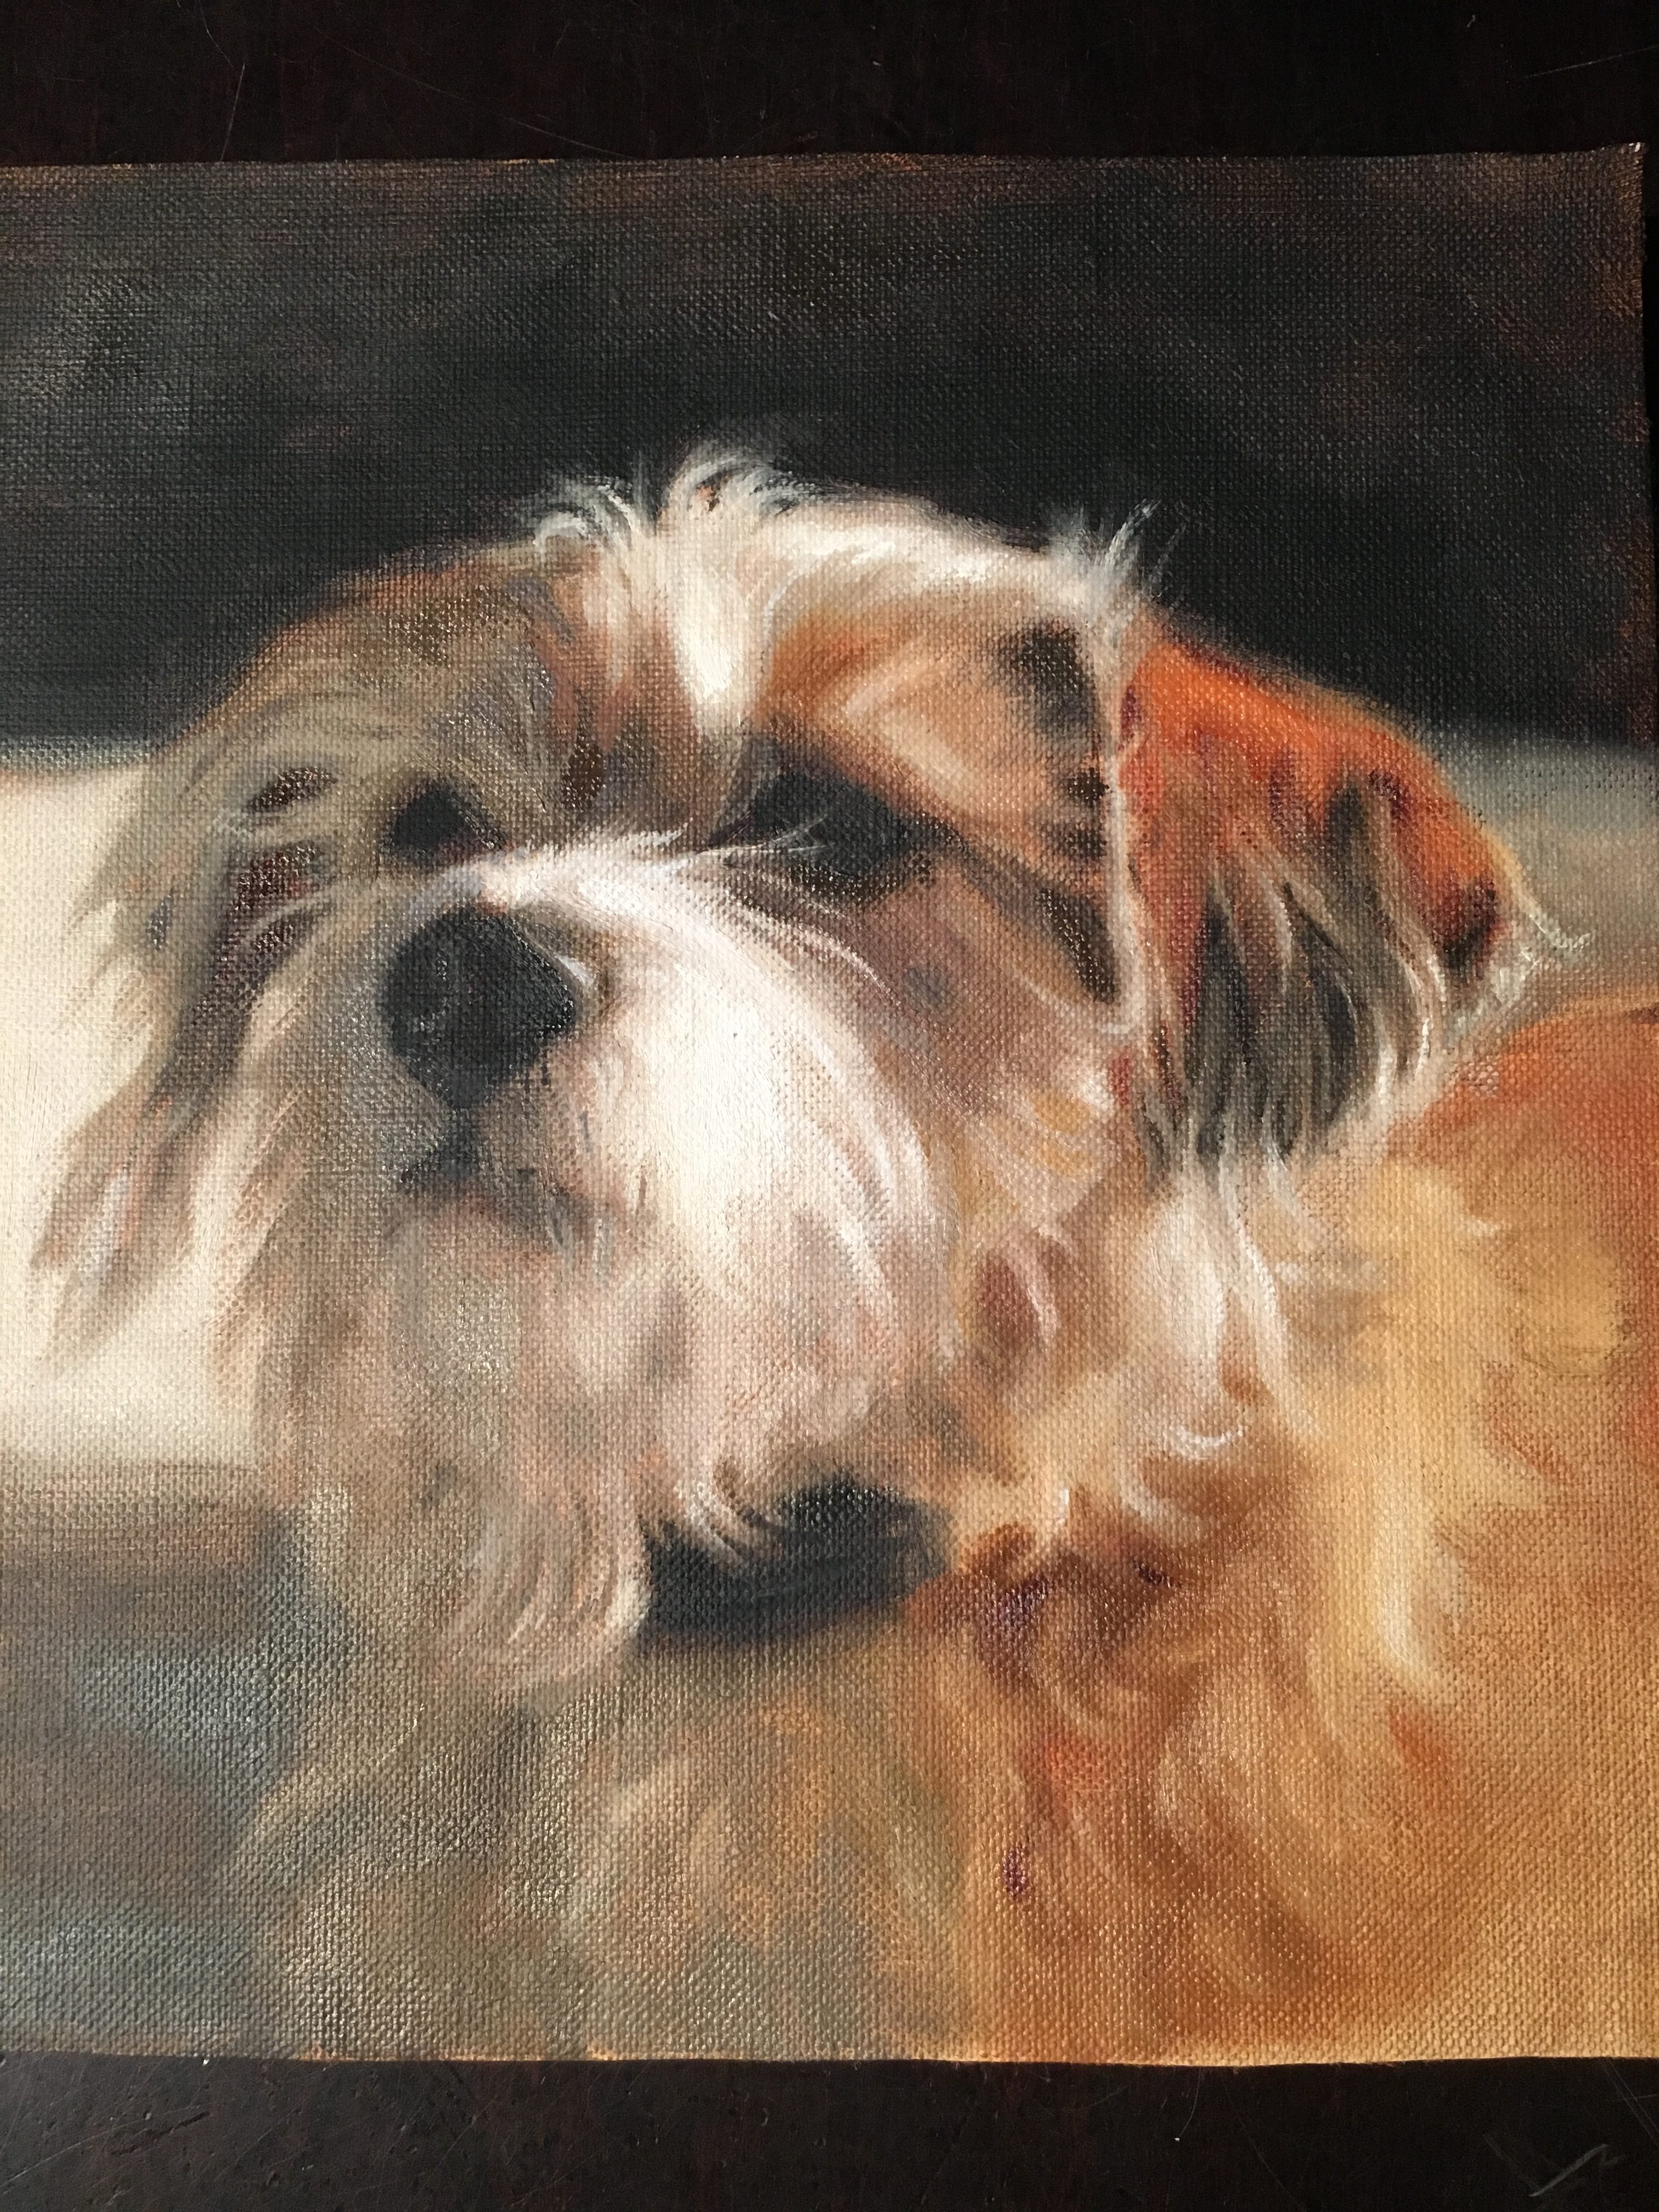 Example of pet dog portrait